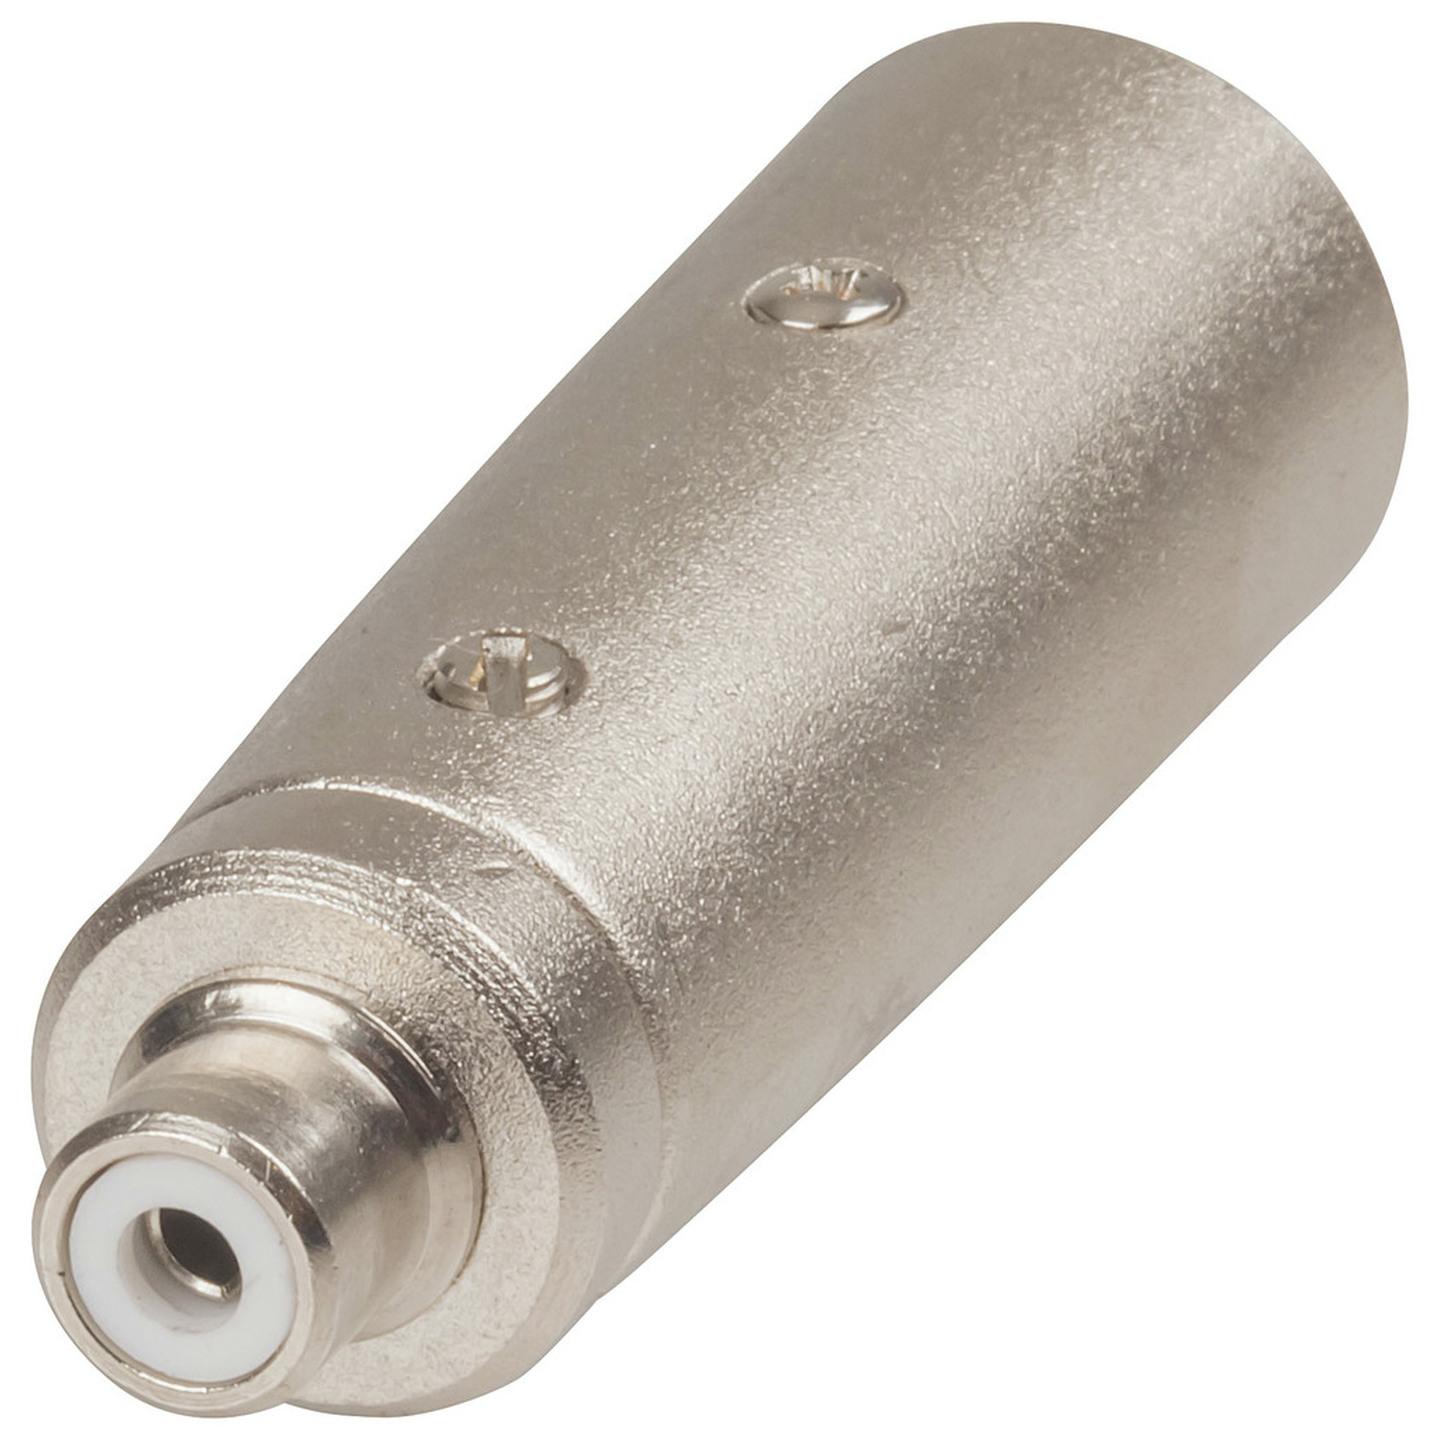 3 Pin XLR Type Plug to RCA Socket Adaptor